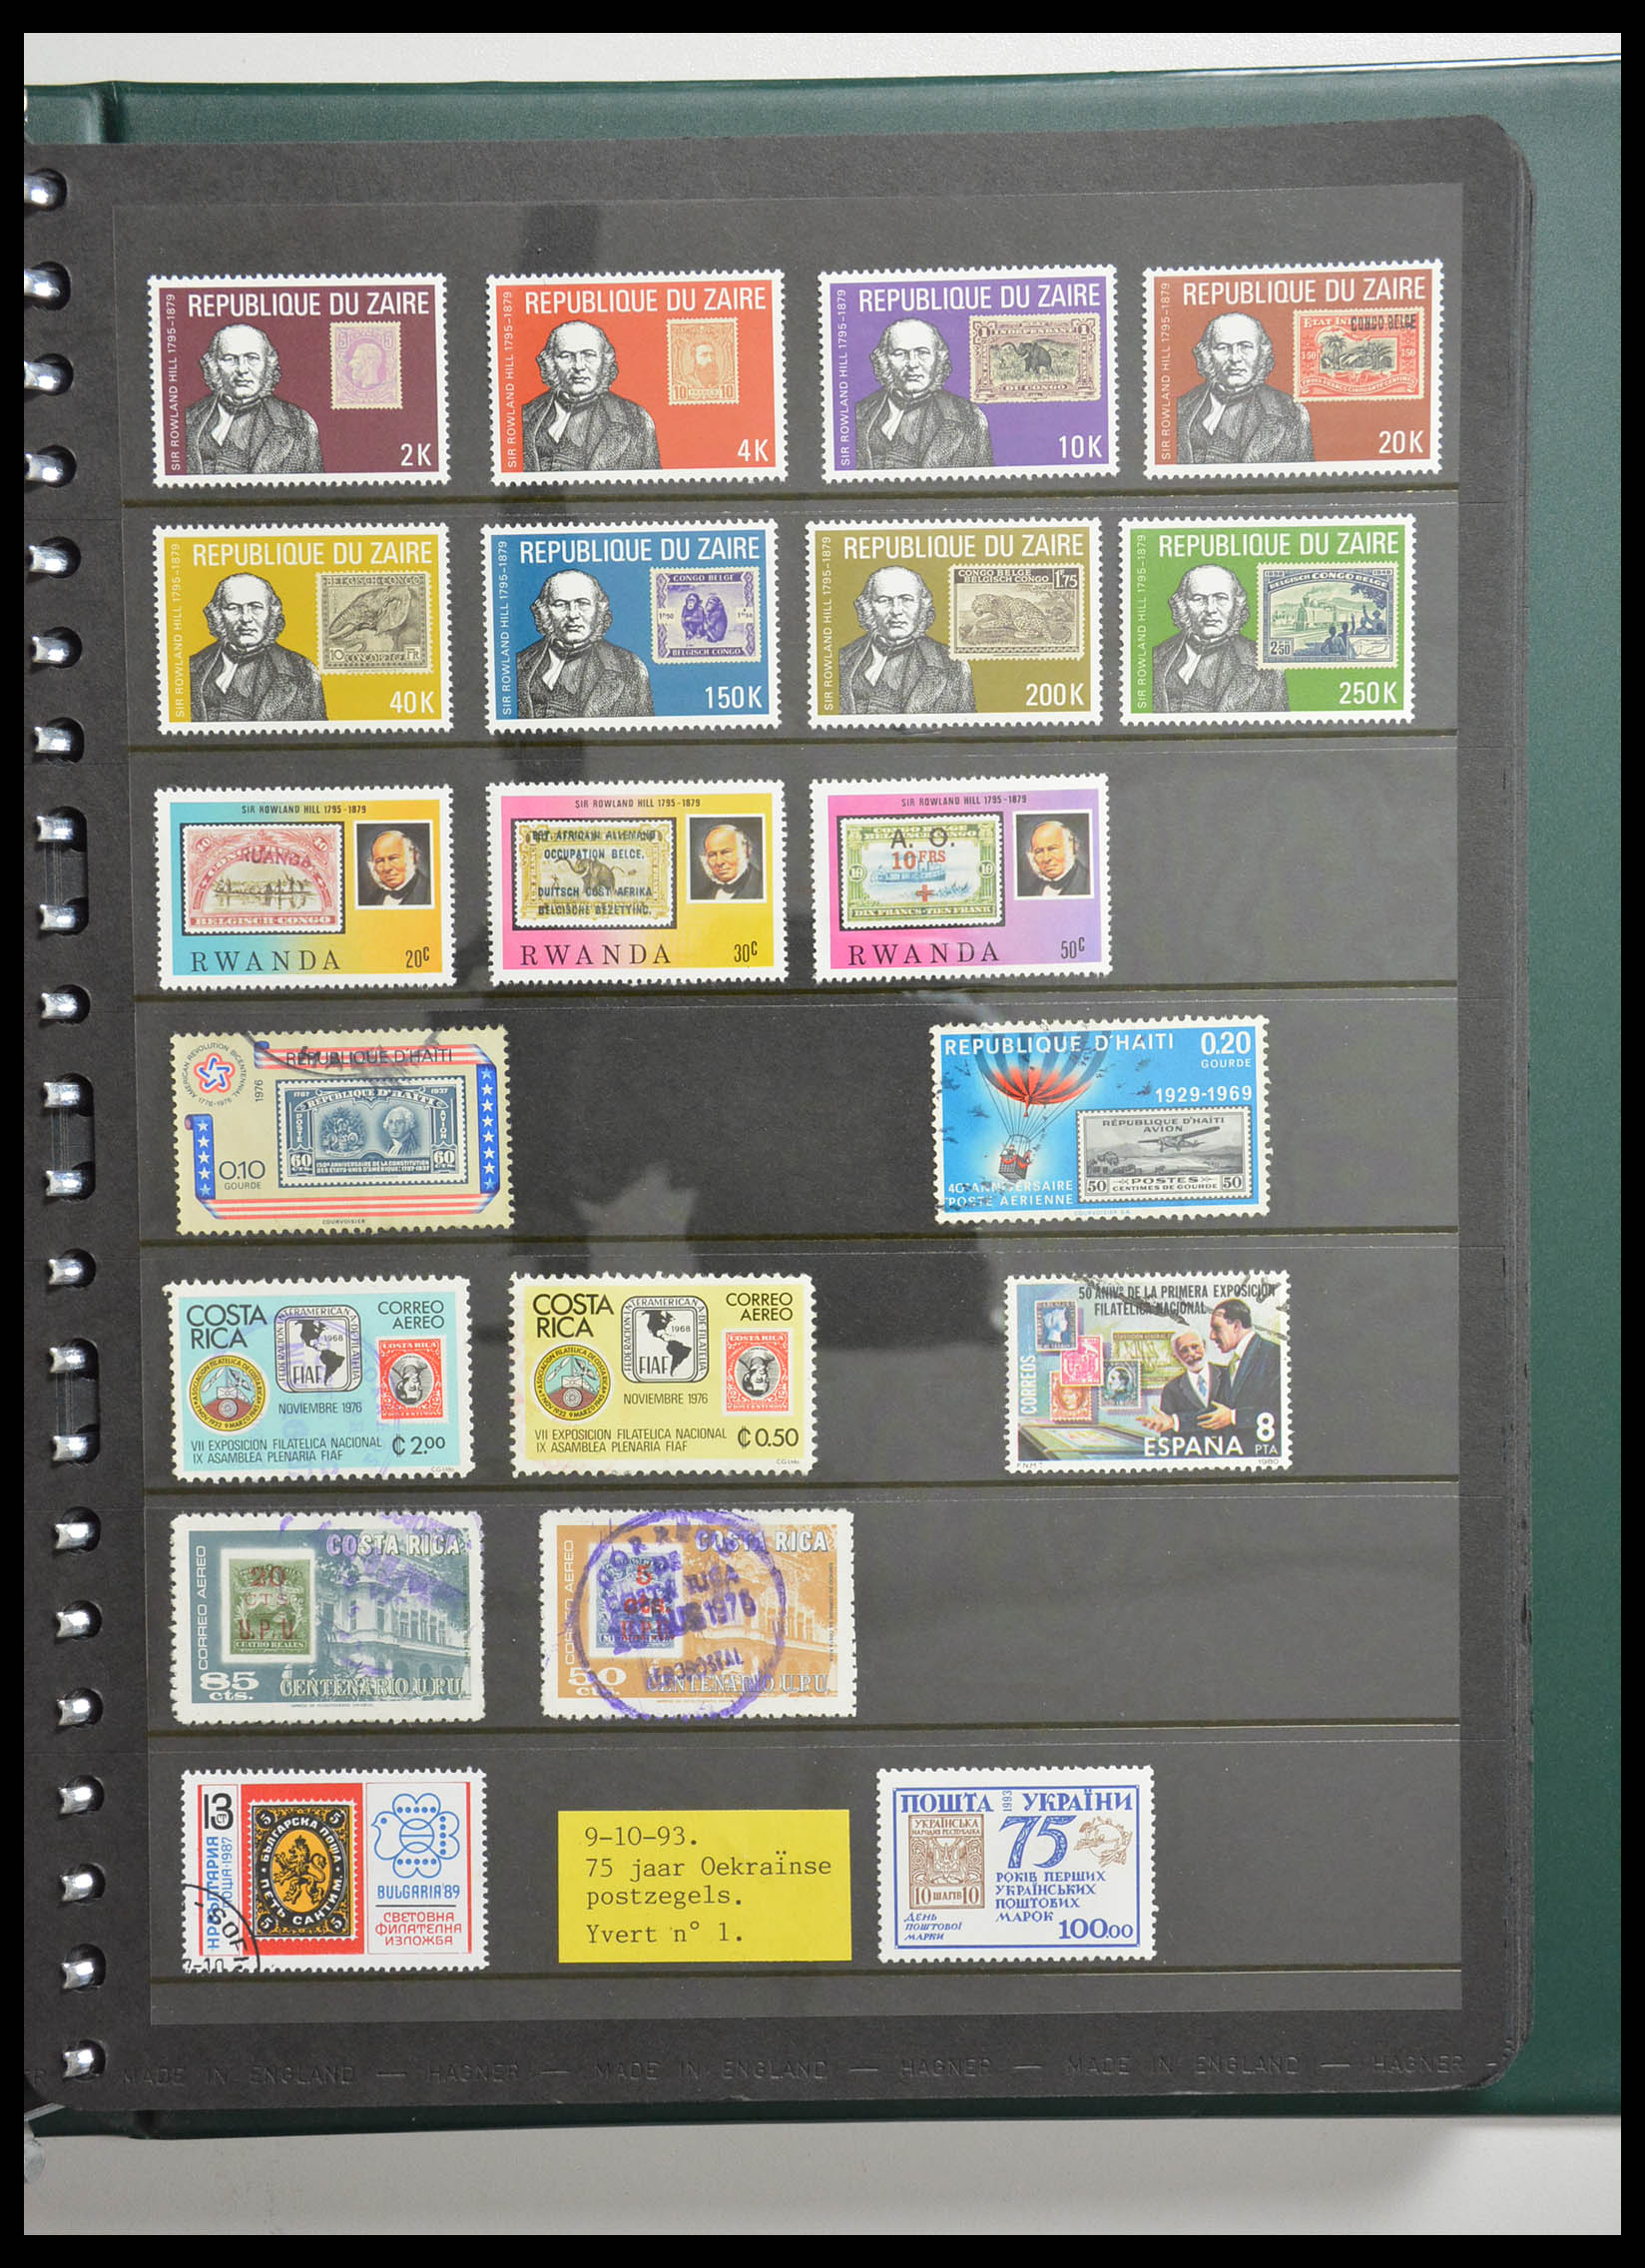 28337 013 - 28337 Postzegel op postzegel 1840-2001.